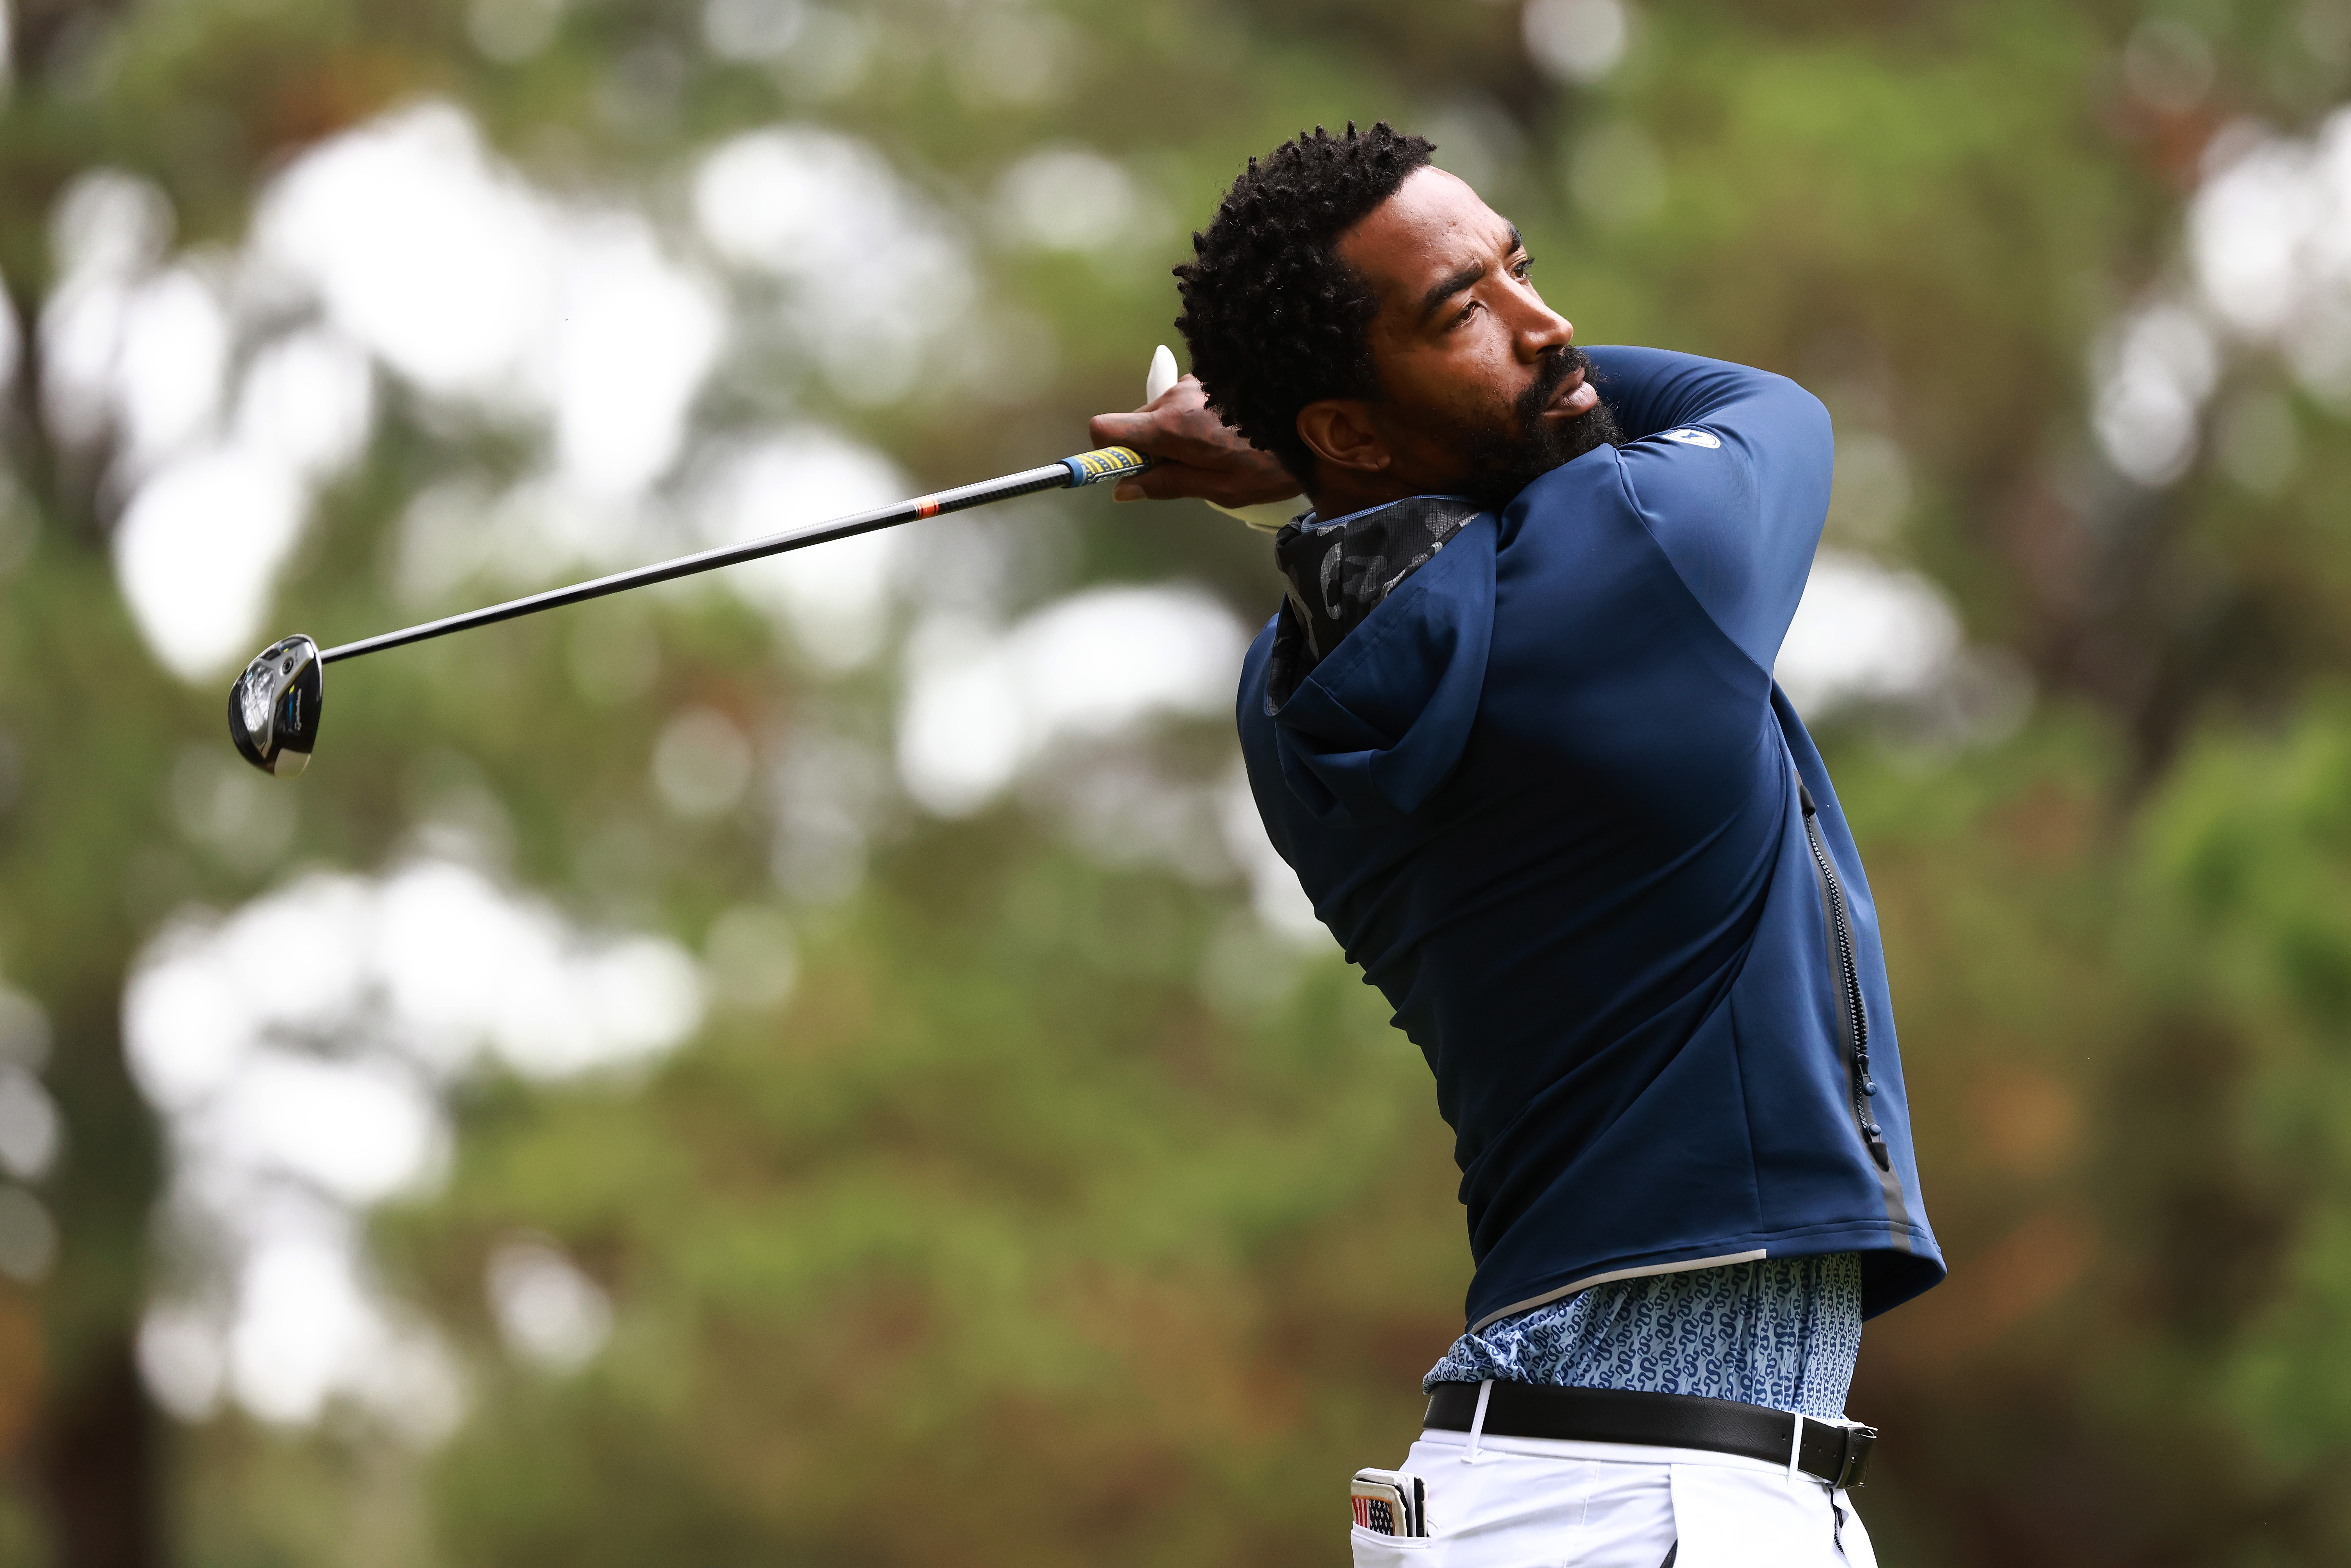 JR Smith’s NCAA Golf Career Gets Off To Bumpy Start